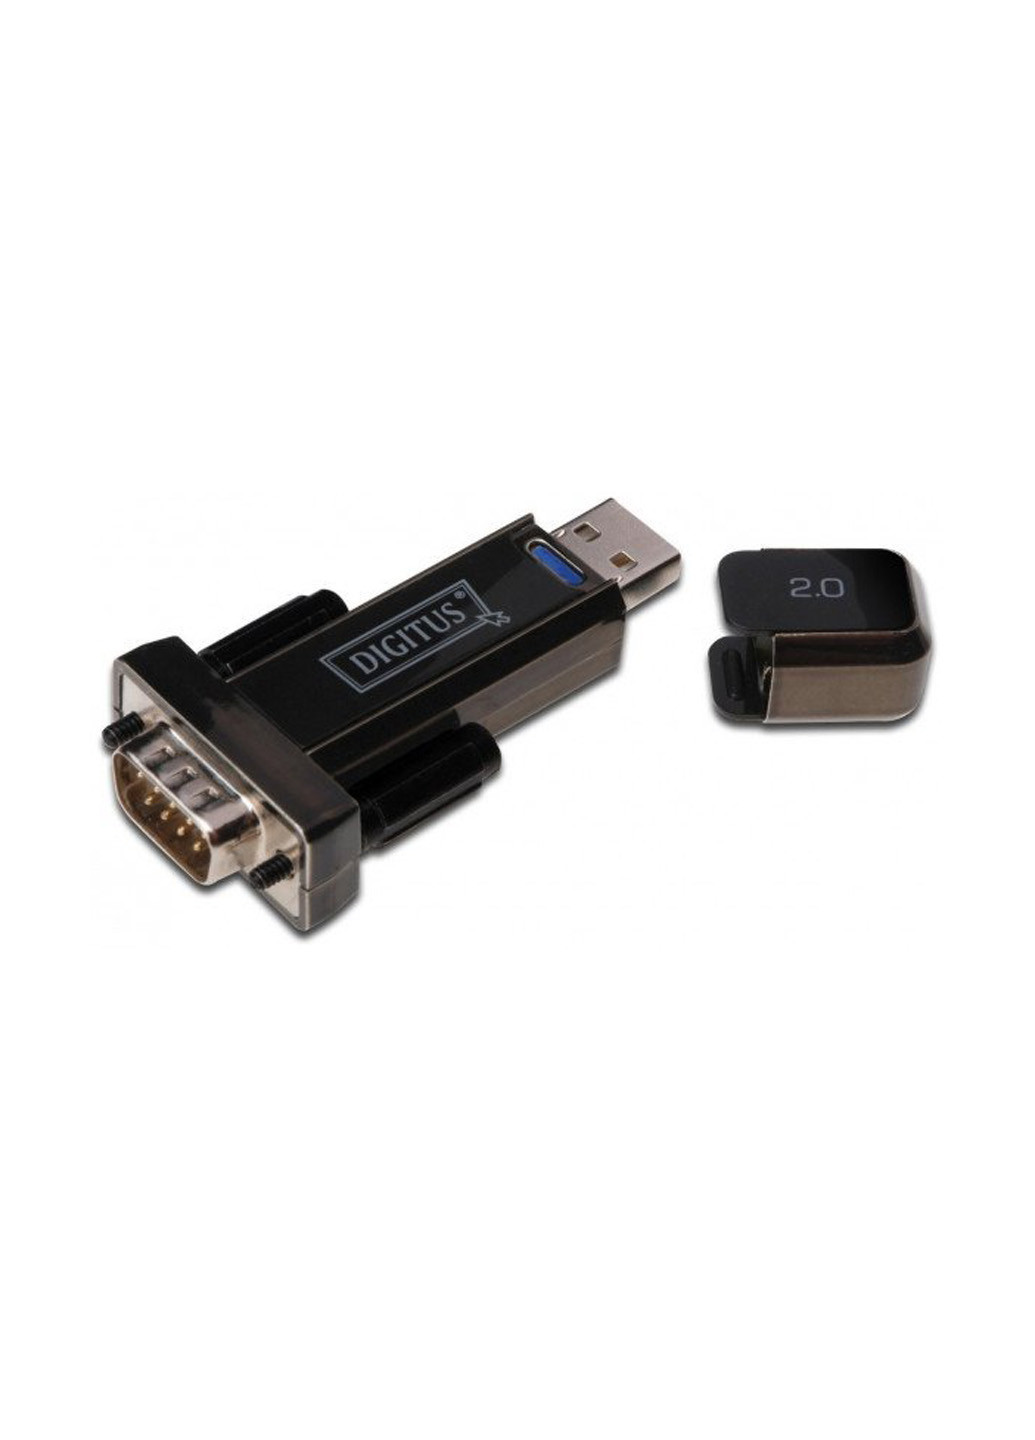 Адаптер USB to RS232, black (DA-70156) Digitus адаптер usb to rs232, black (da-70156) (136463981)